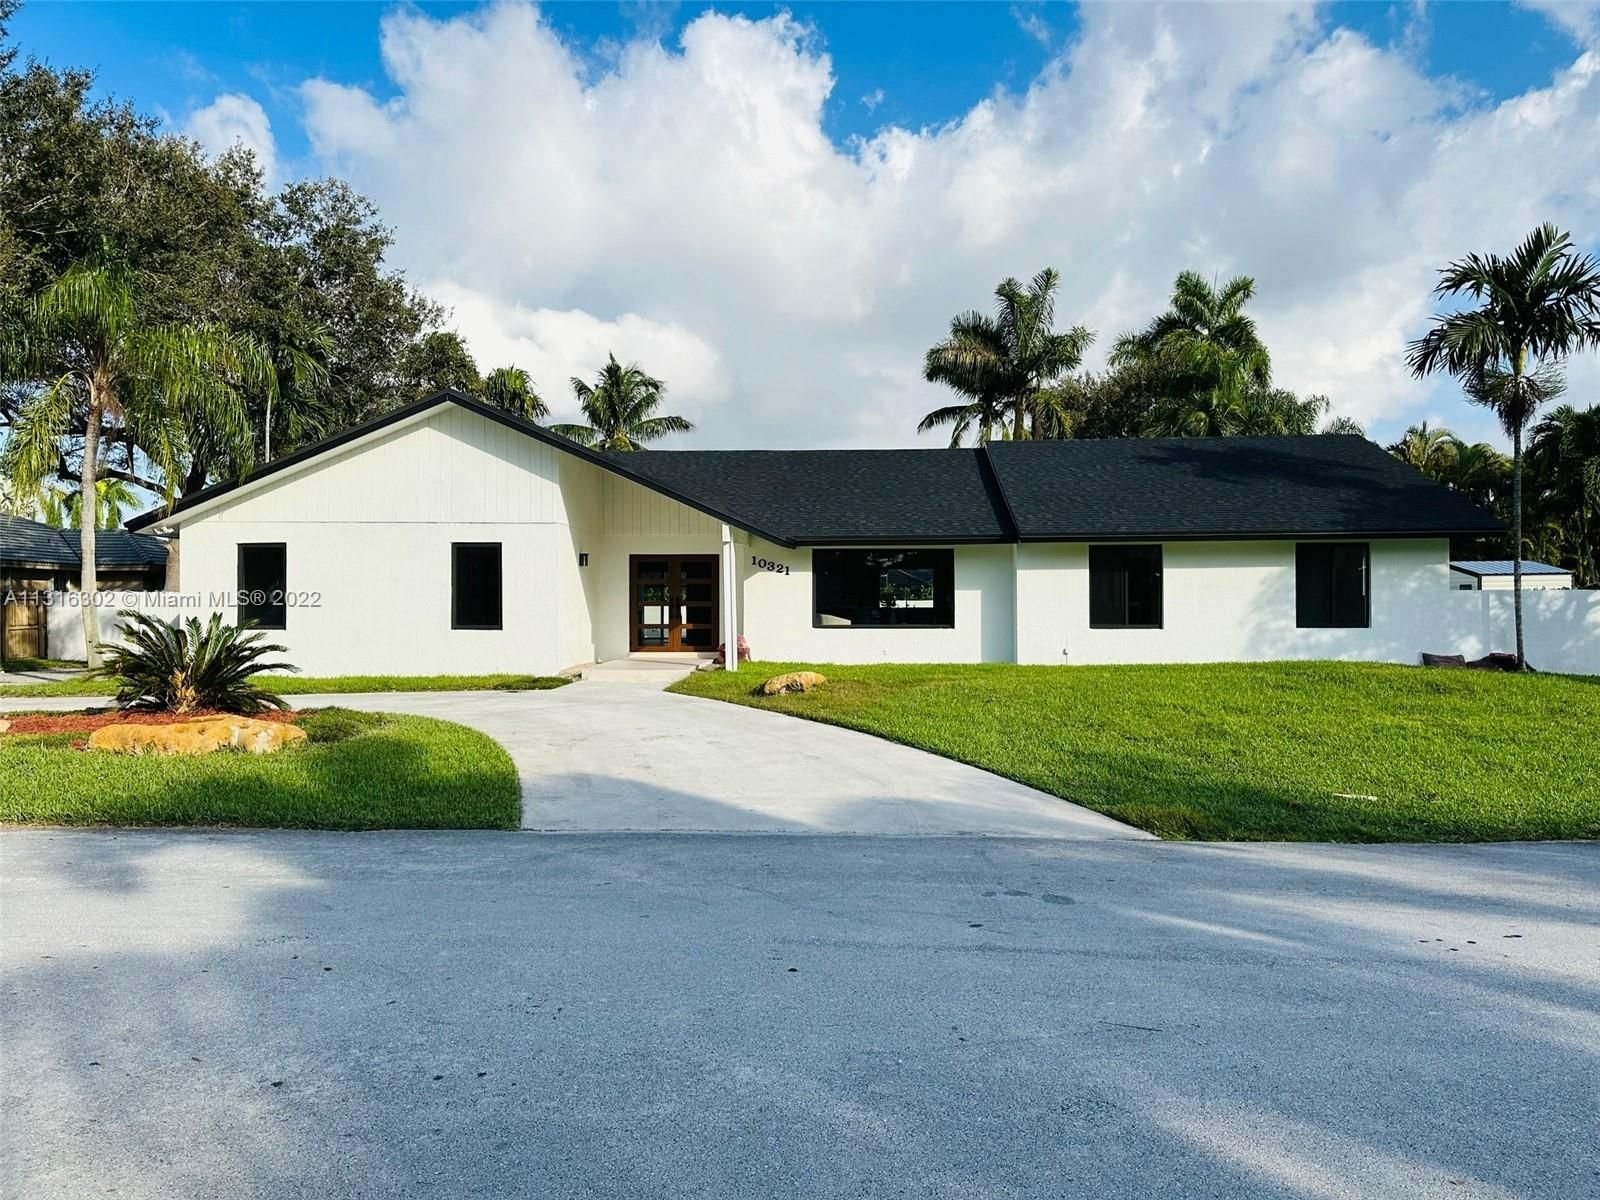 Real estate property located at 10321 139th St, Miami-Dade County, Miami, FL